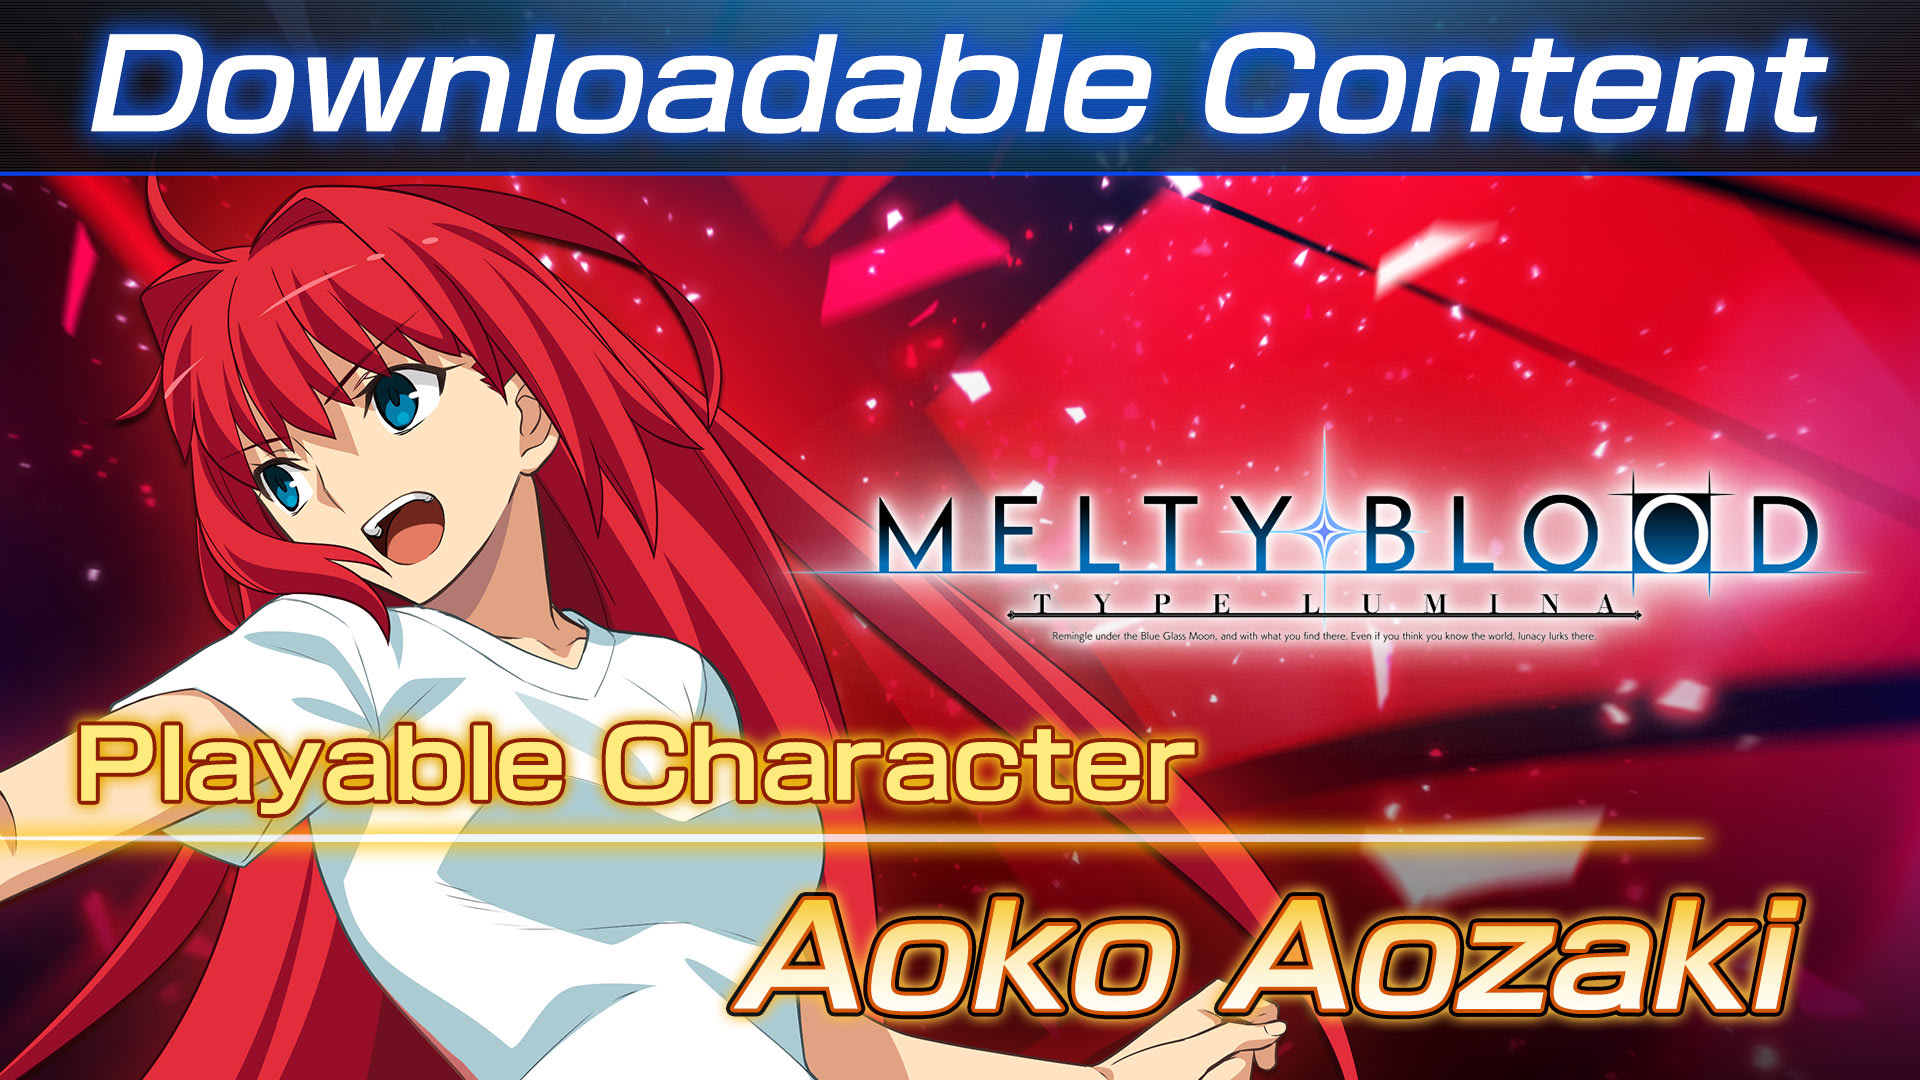 DLC: Playable Character - Aoko Aozaki